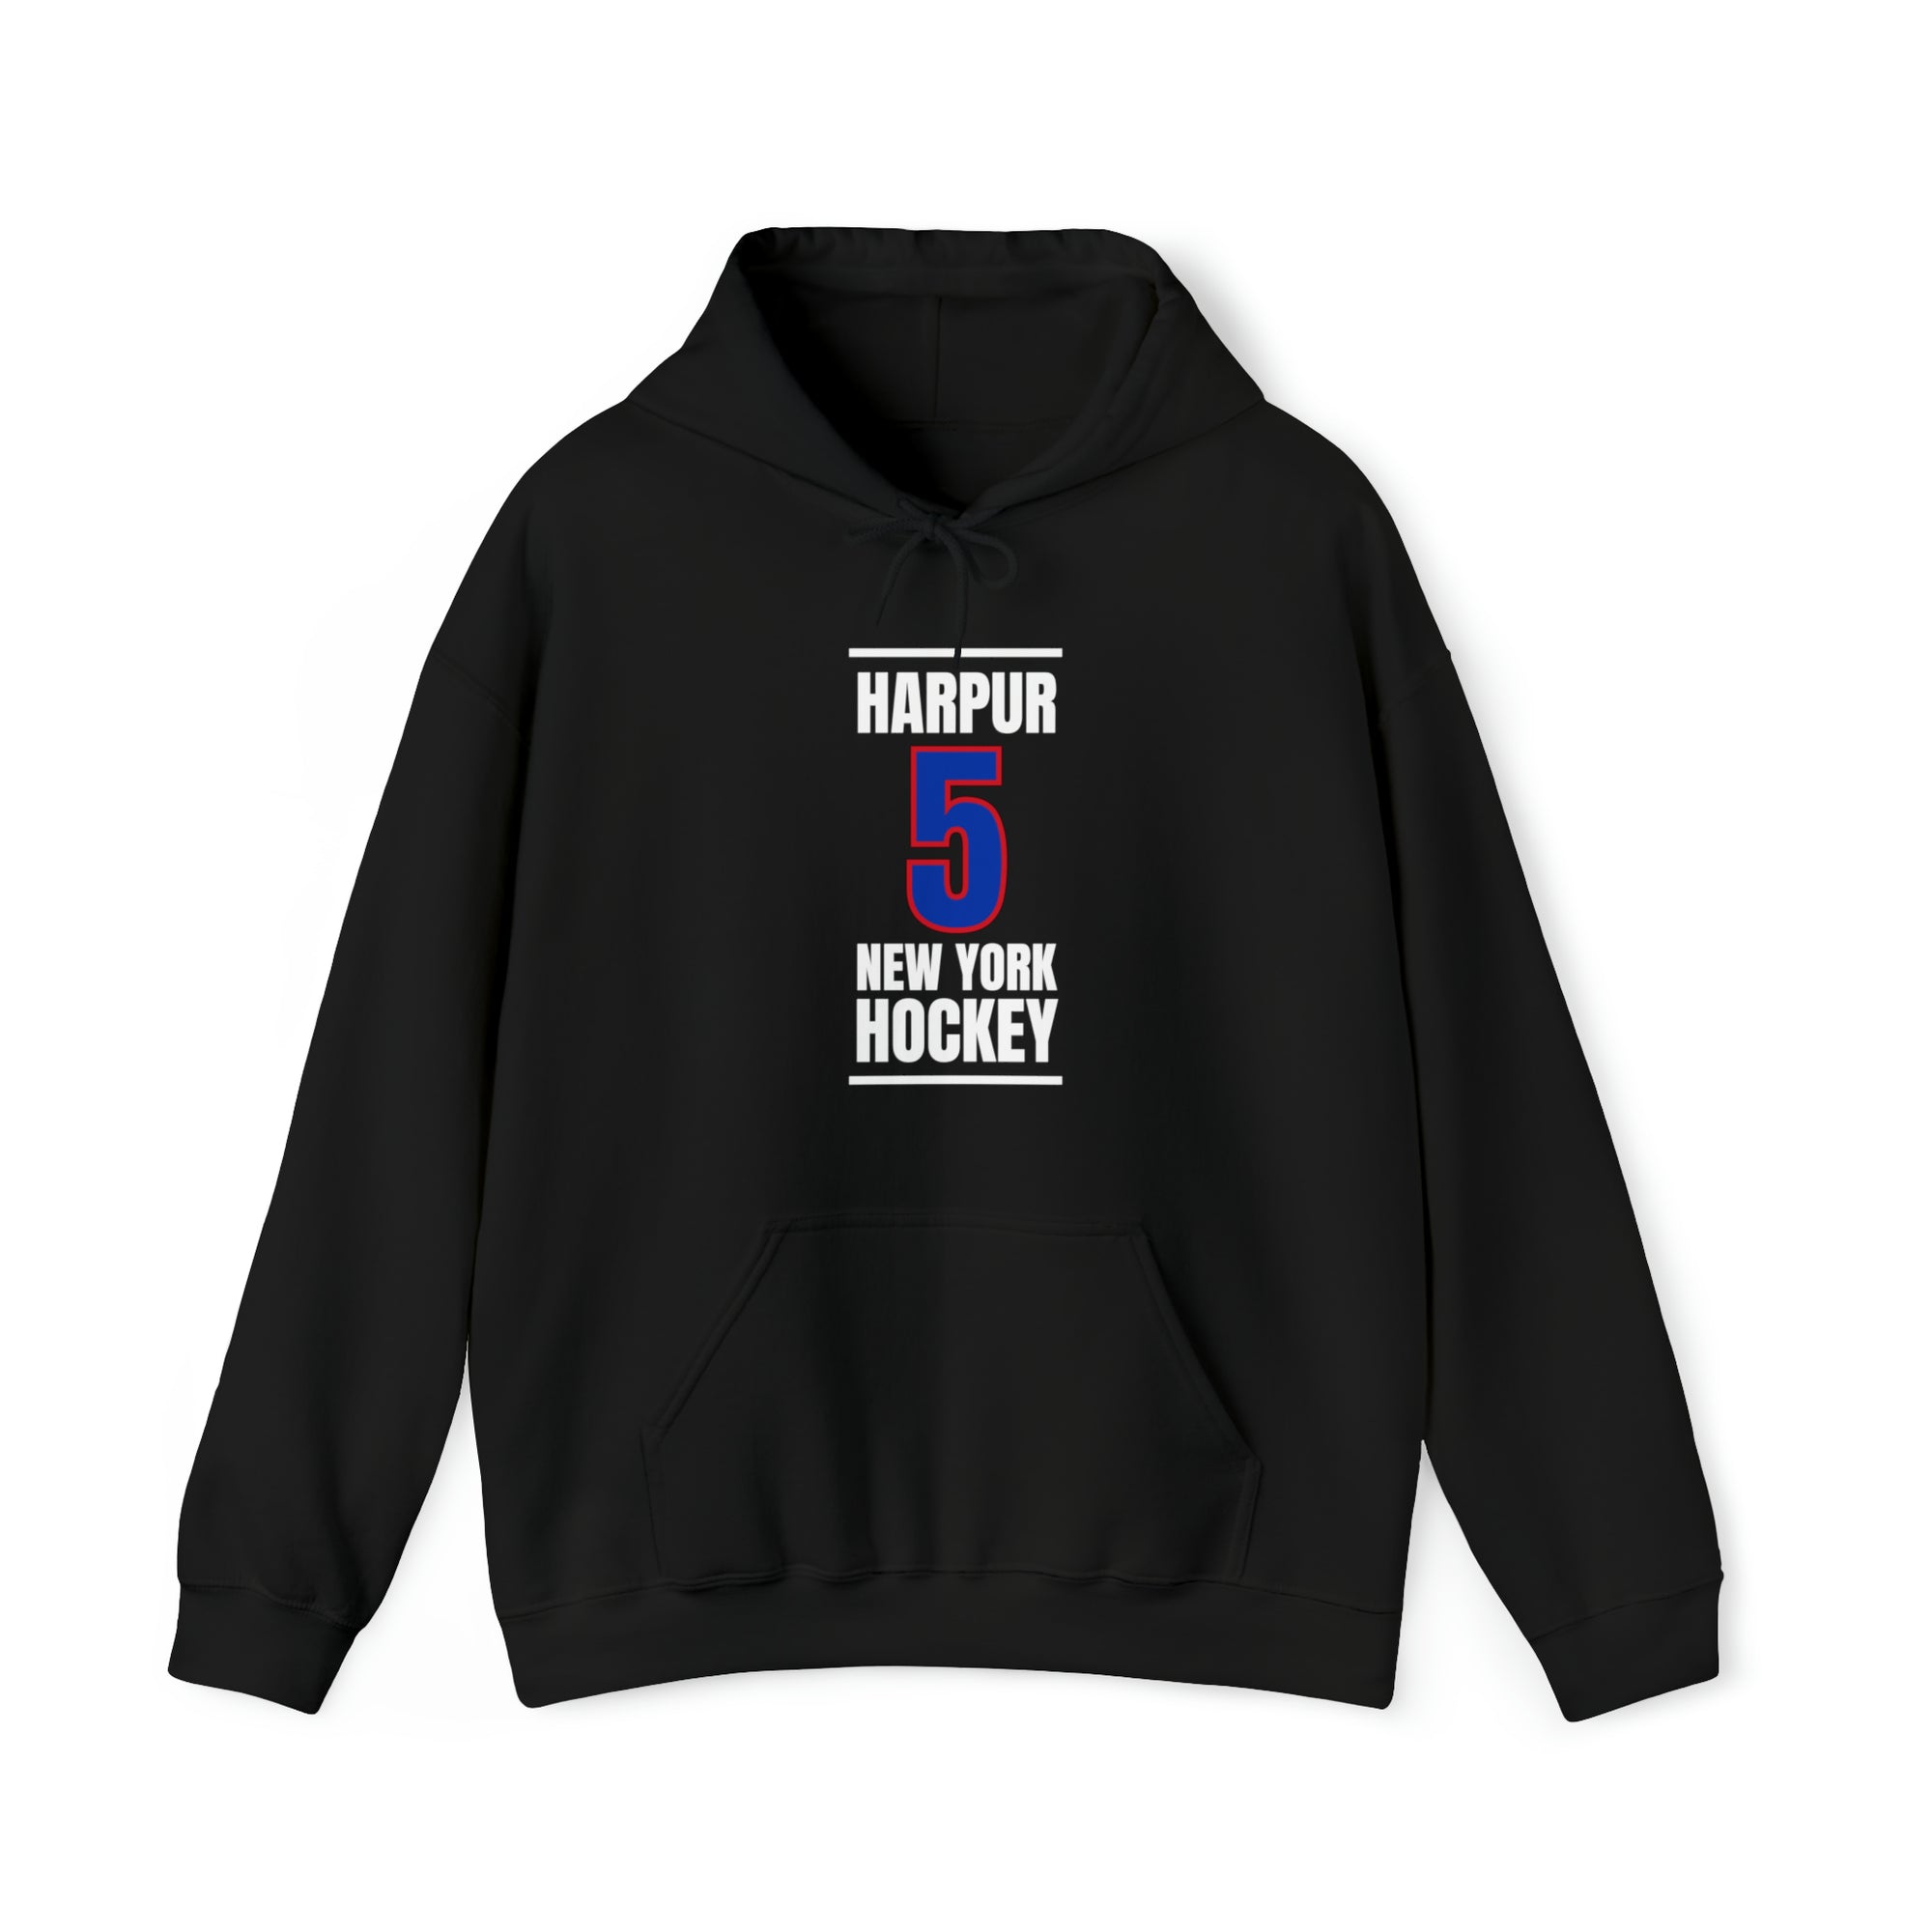 Harpur 5 New York Hockey Royal Blue Vertical Design Unisex Hooded Sweatshirt